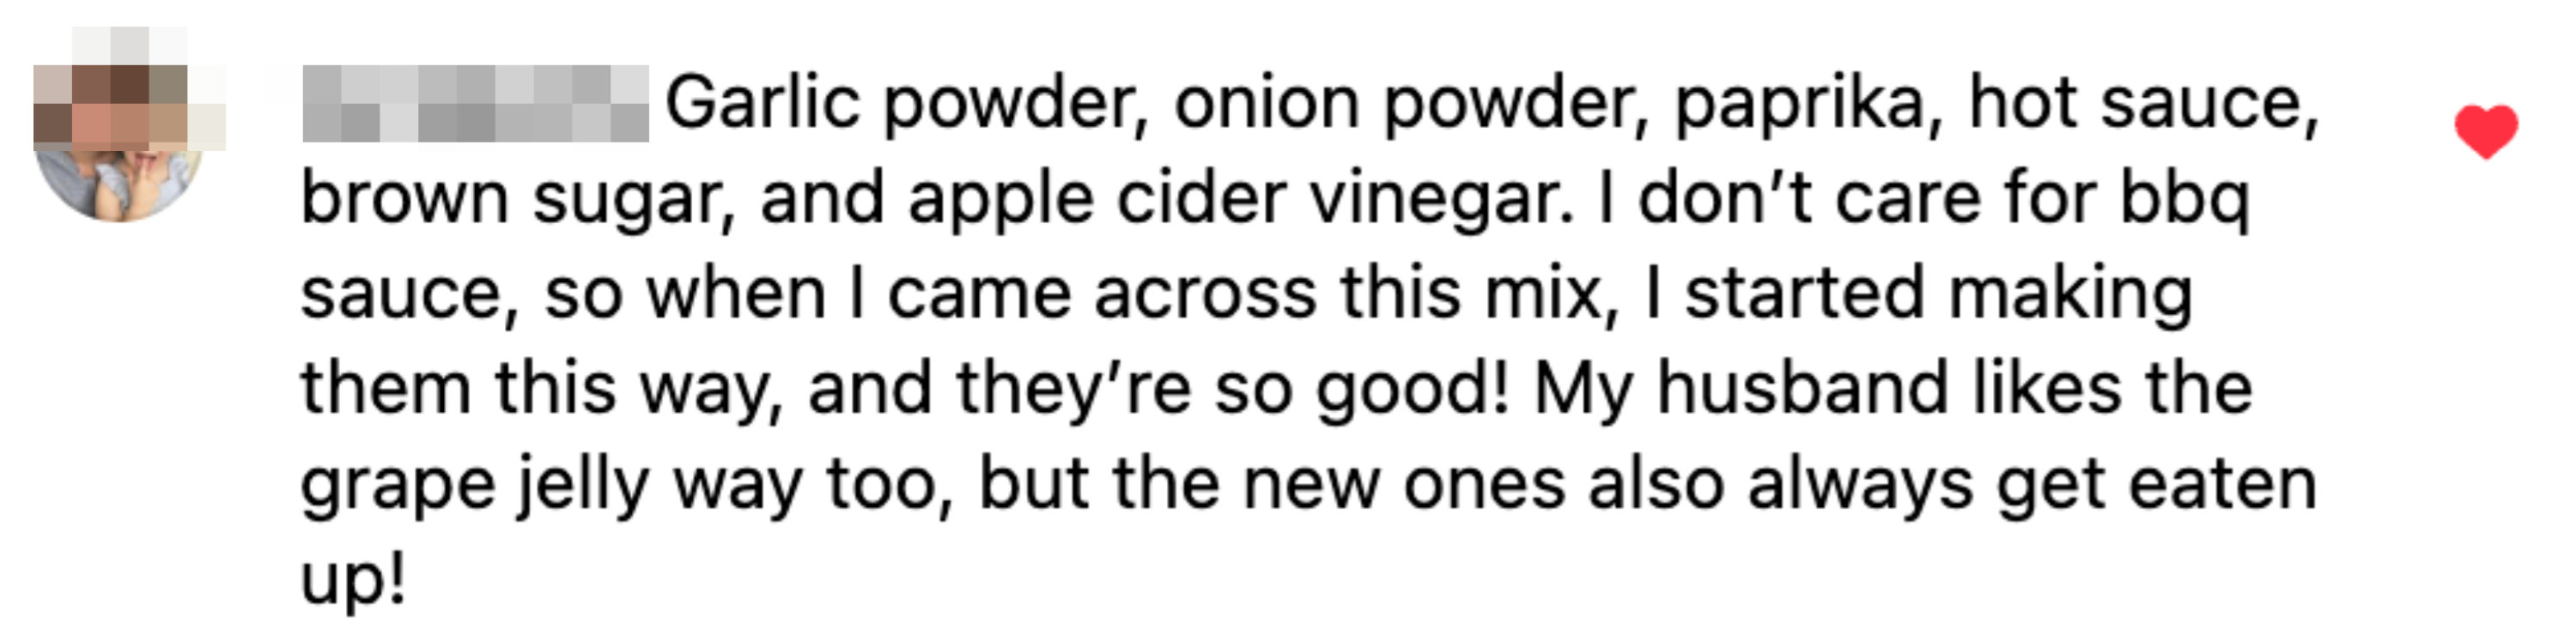 comment reads, garlic powder onion powder, paprika, hot sauce, brown sugar, and apple cider vinegar